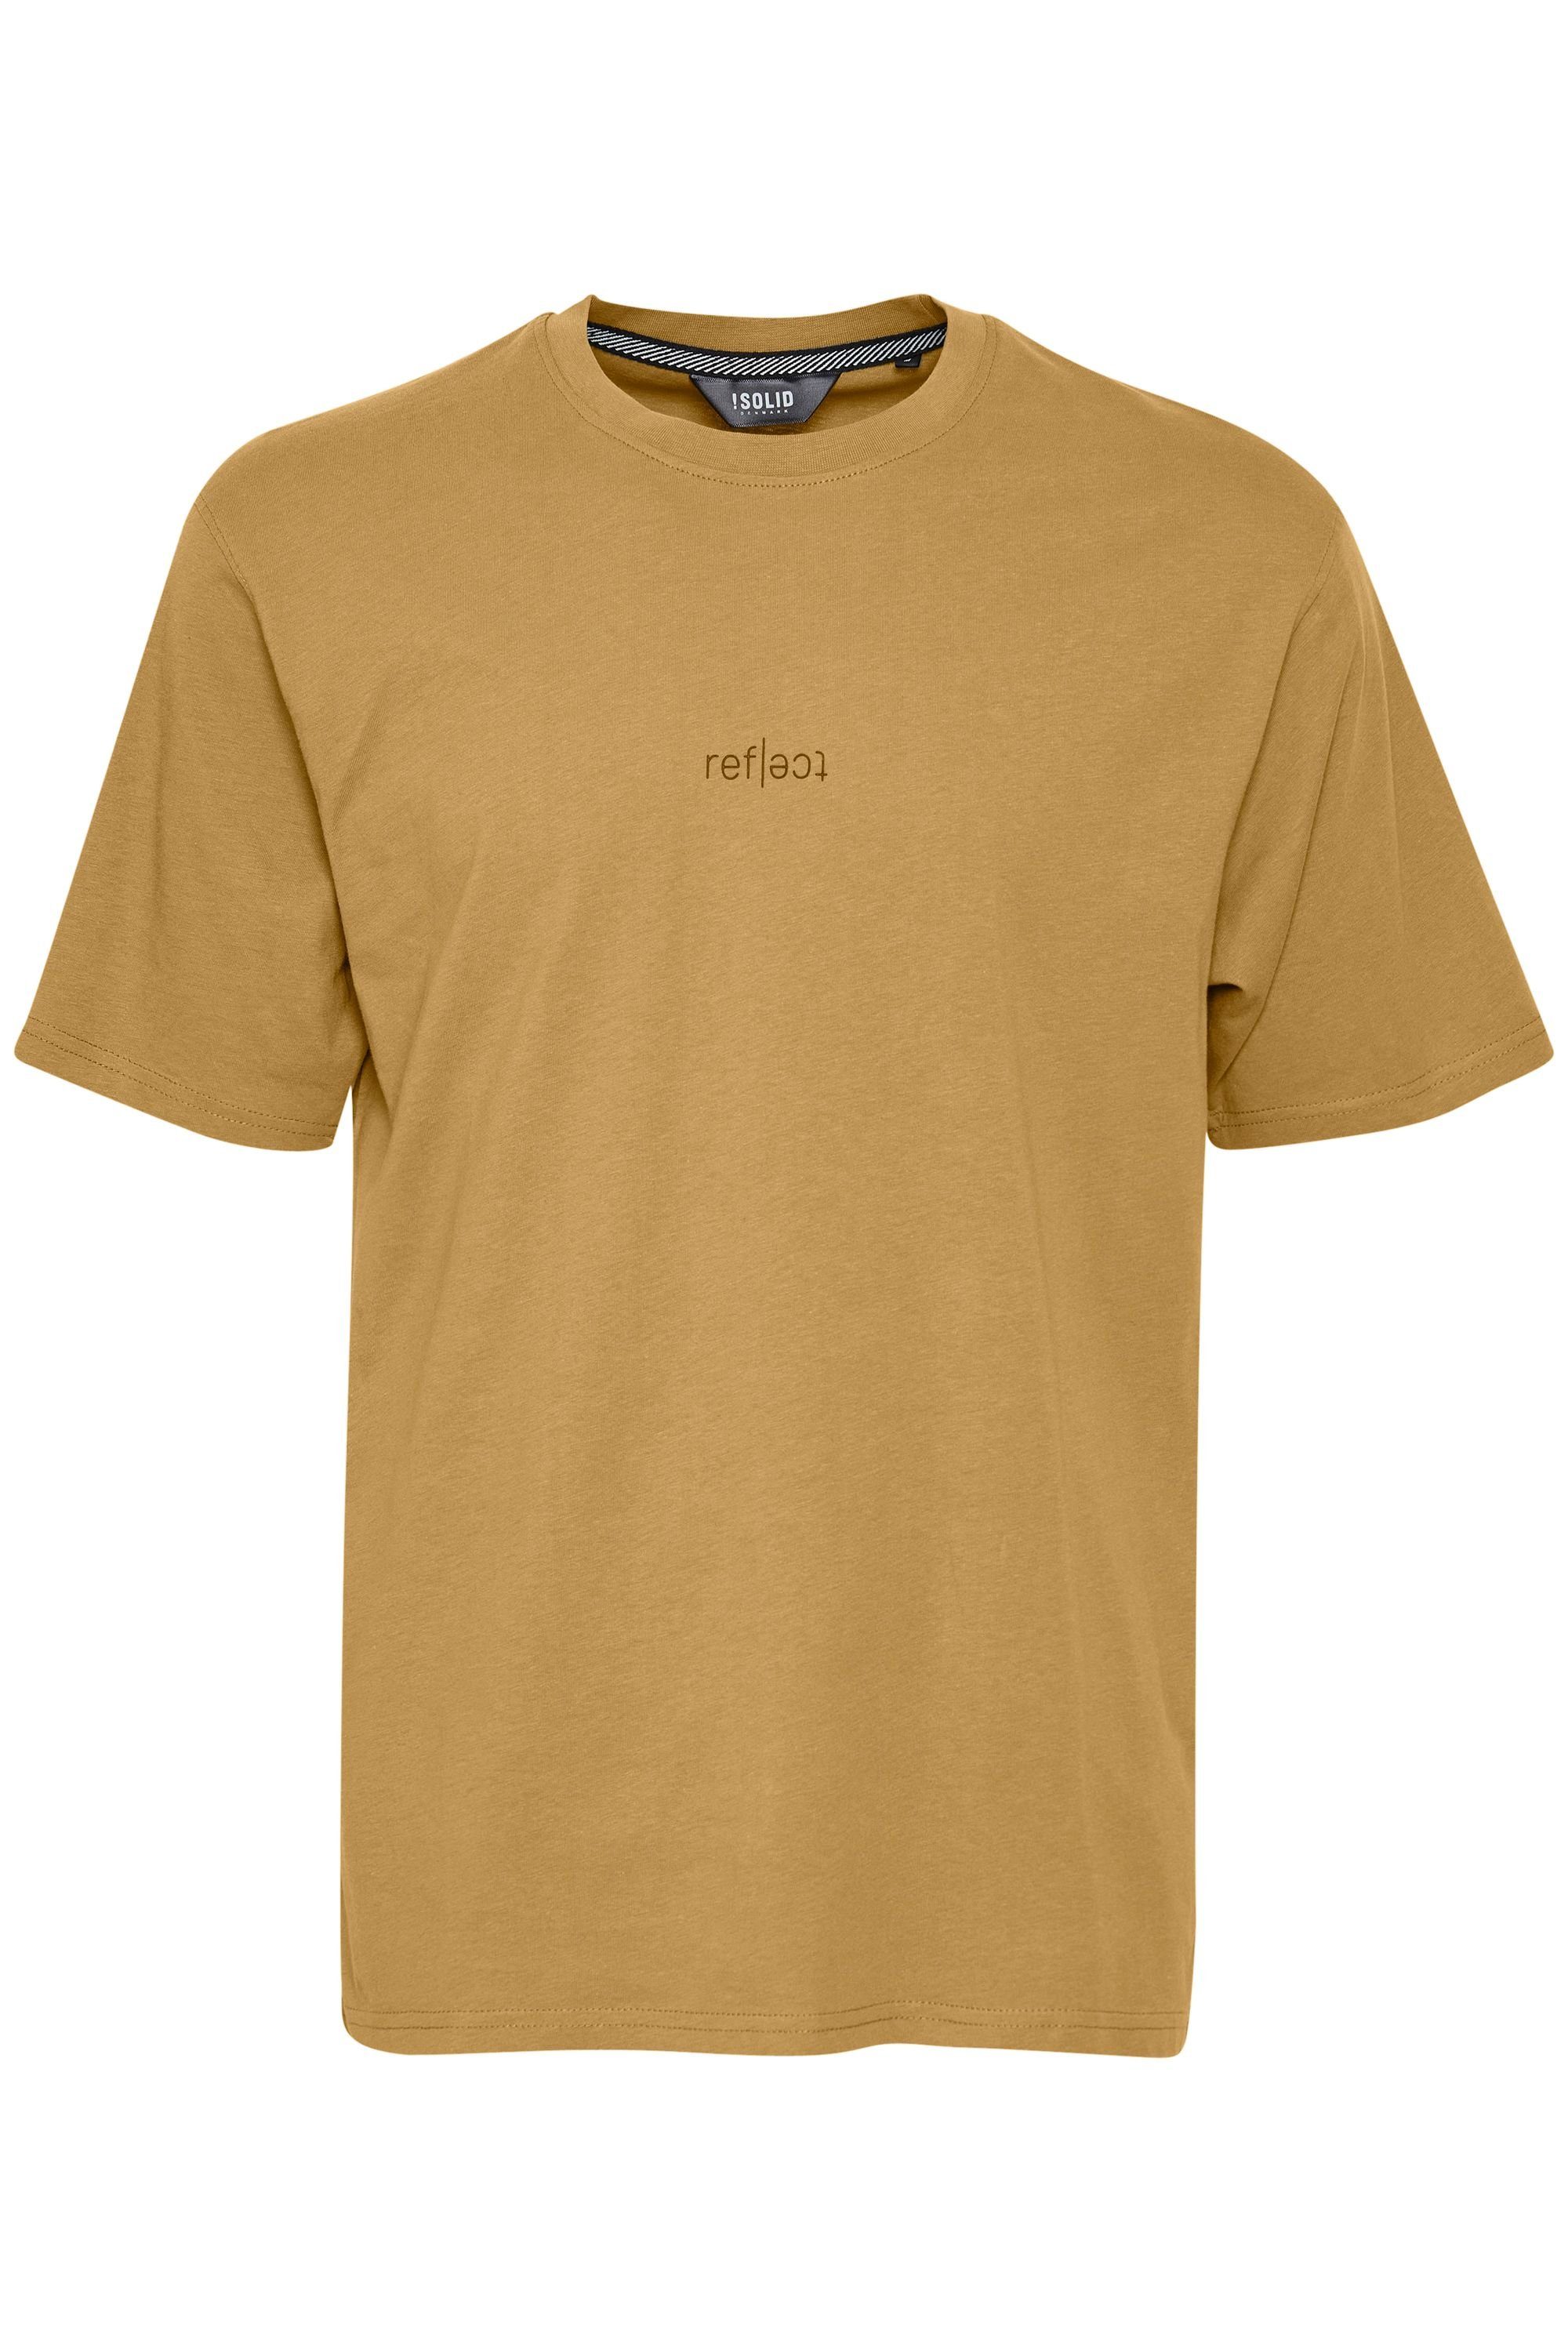 (171022) SDBrendan T-Shirt Sand !Solid